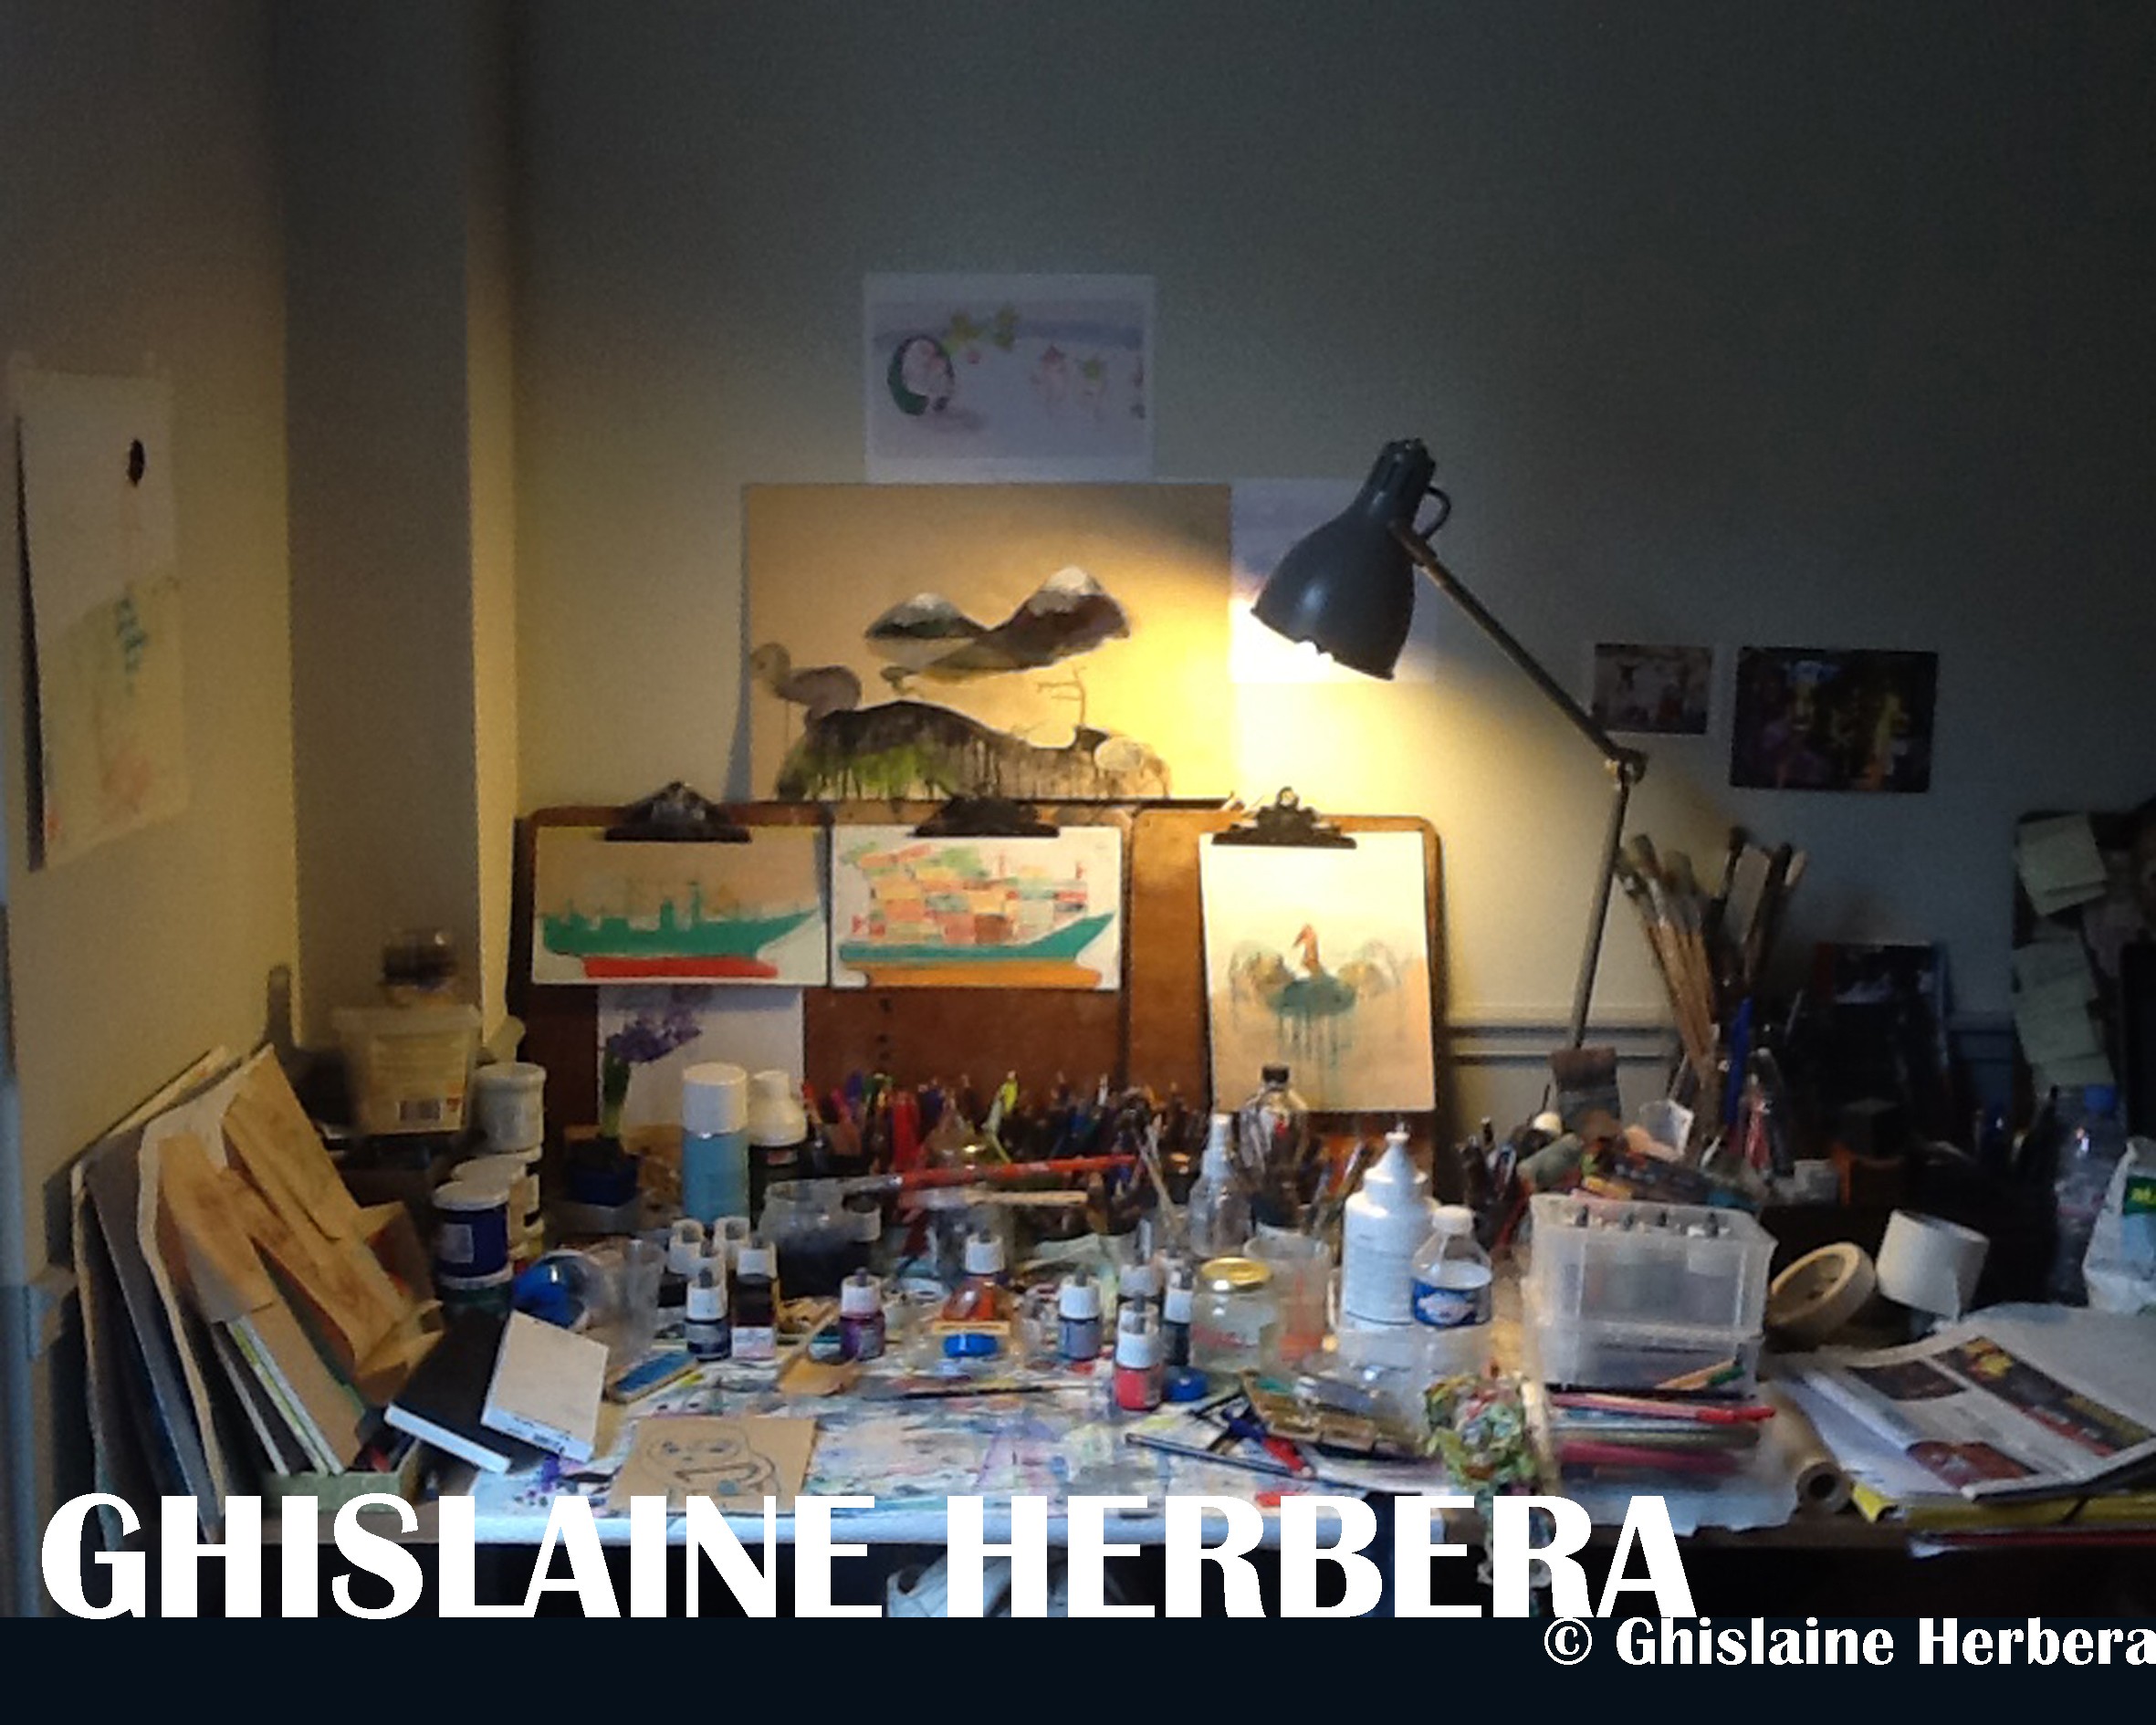 Ghislaine Herbera